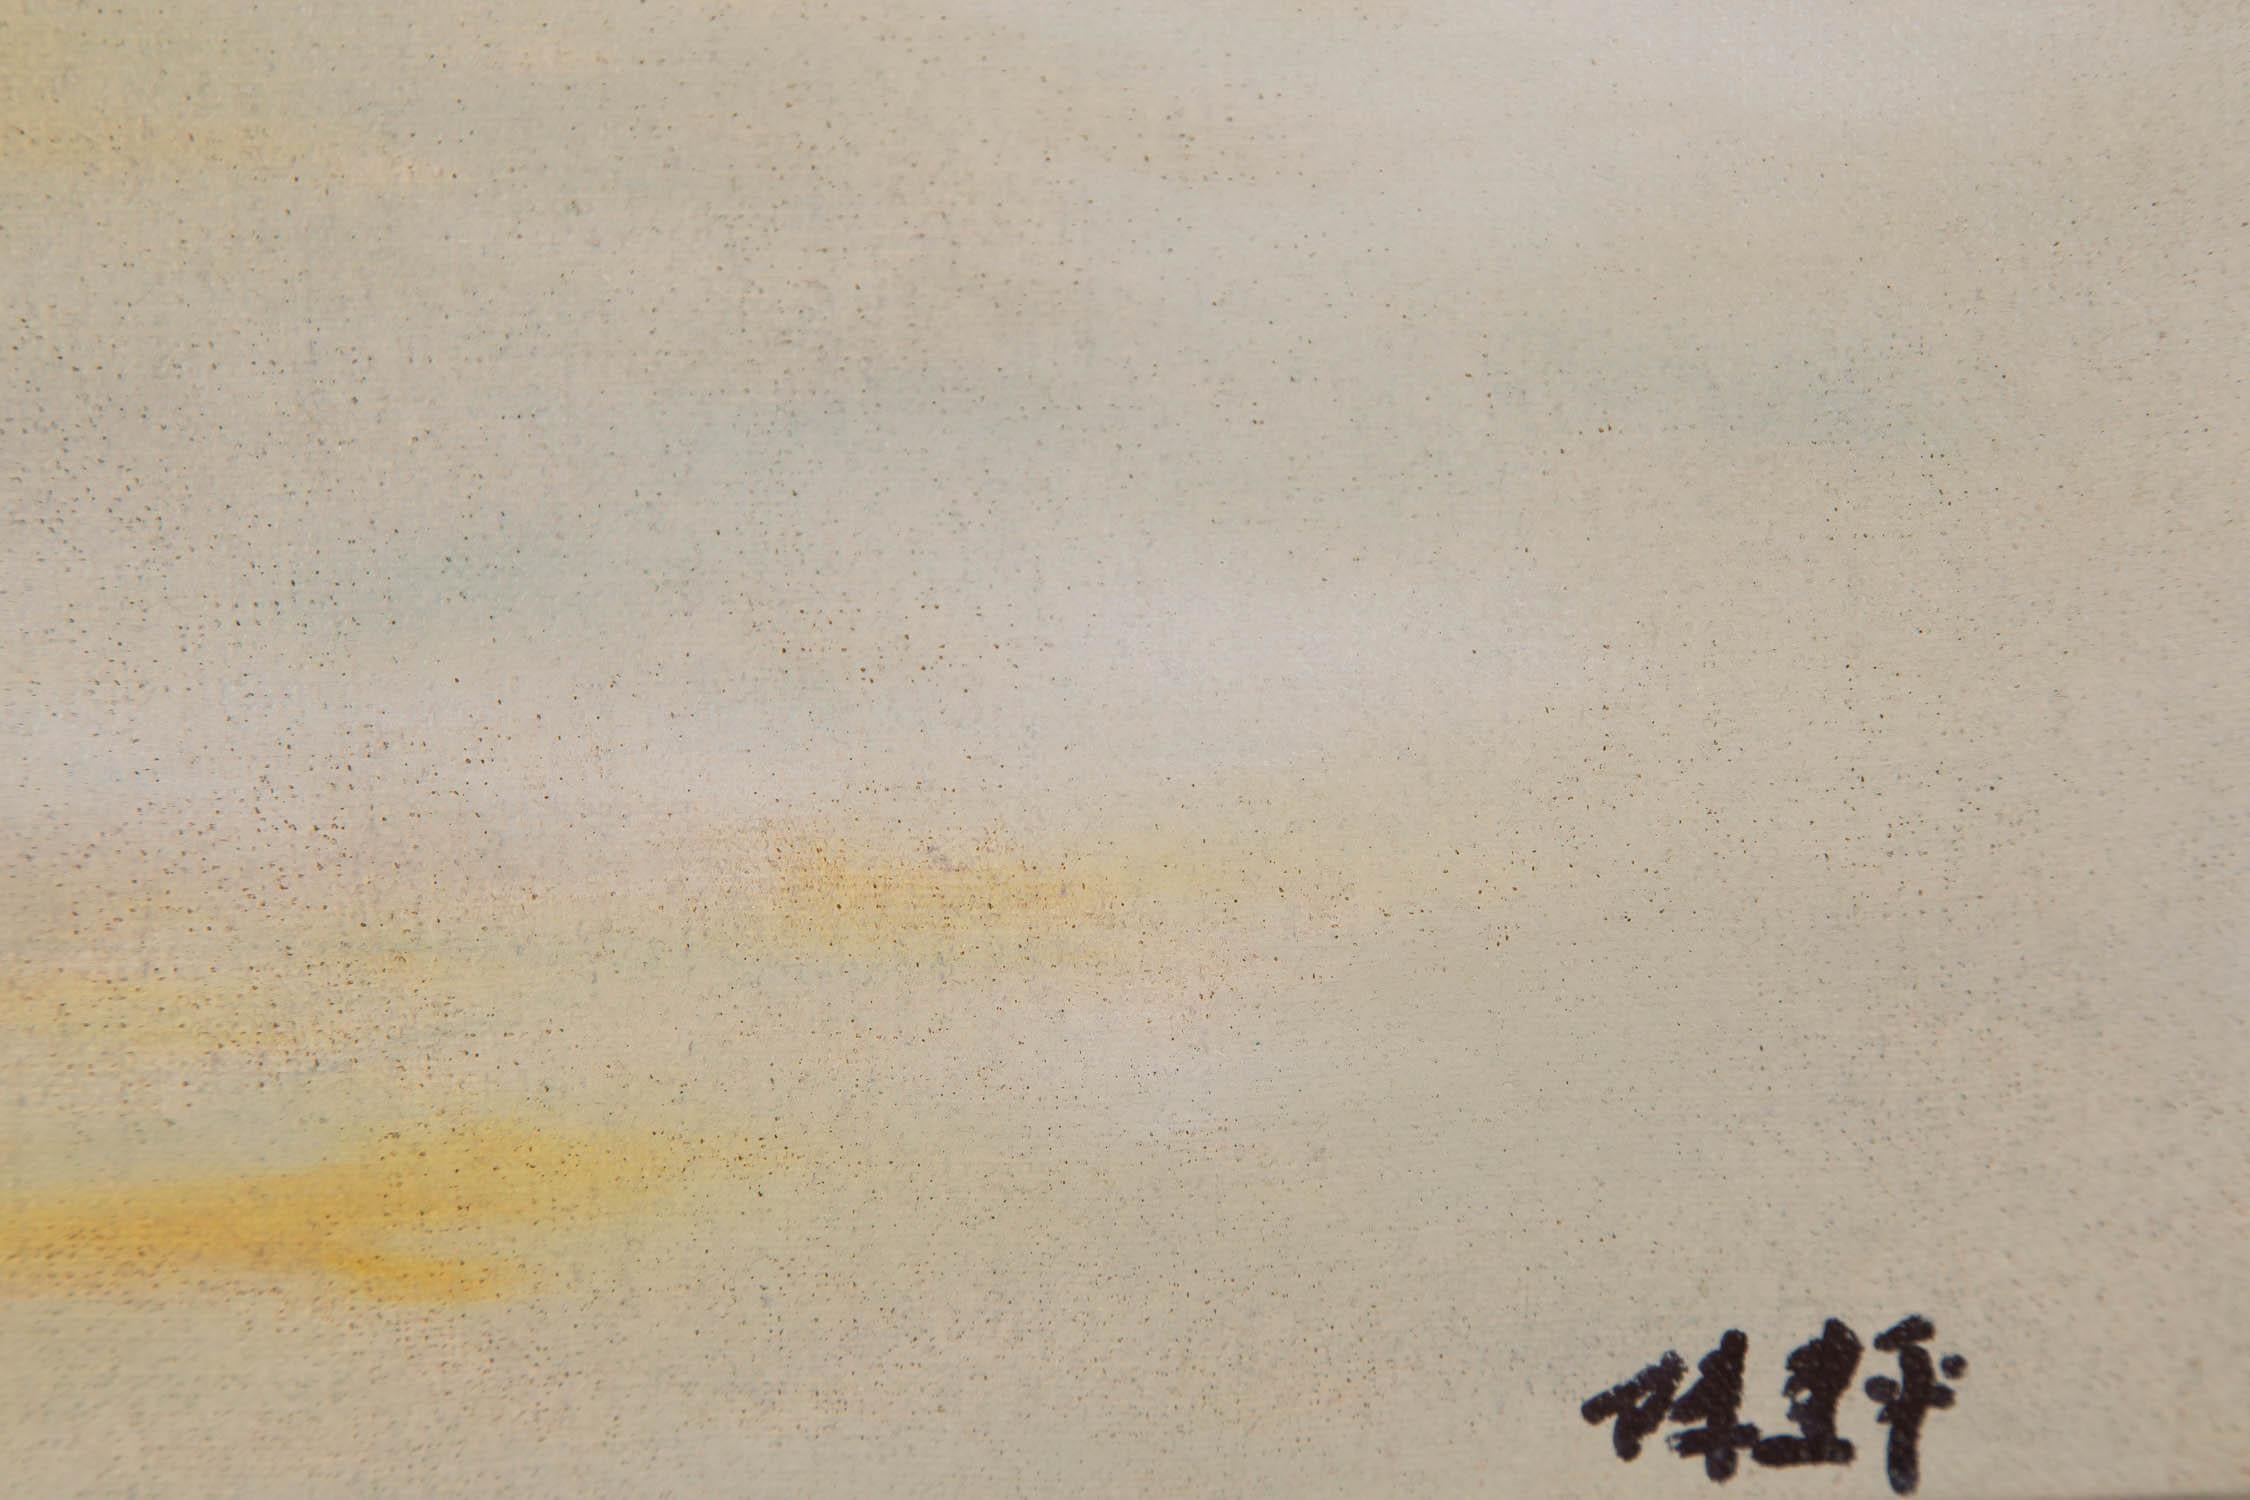 Jianping Chen Surrealist Original Oil Painting 